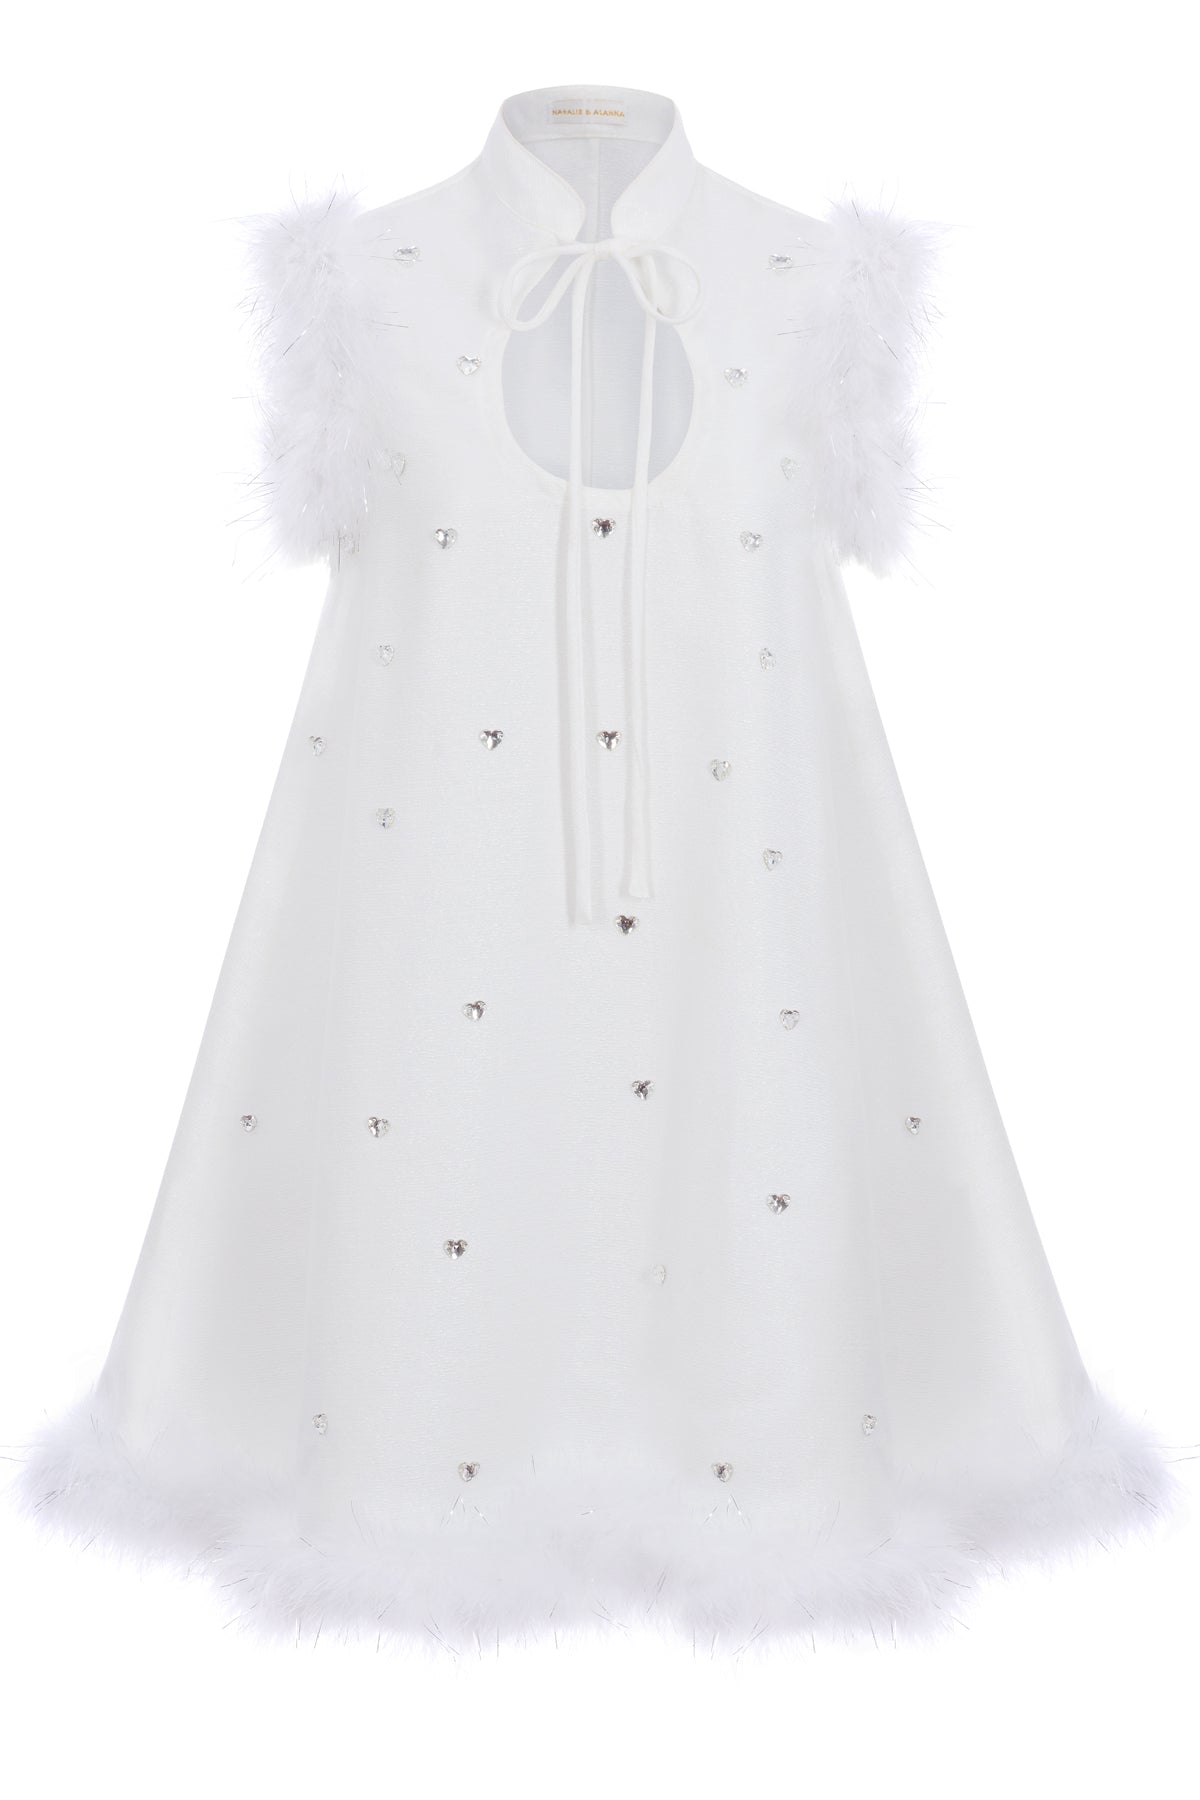 Barbarella Marabou Trimmed Bridal Mini Dress- Made to Order